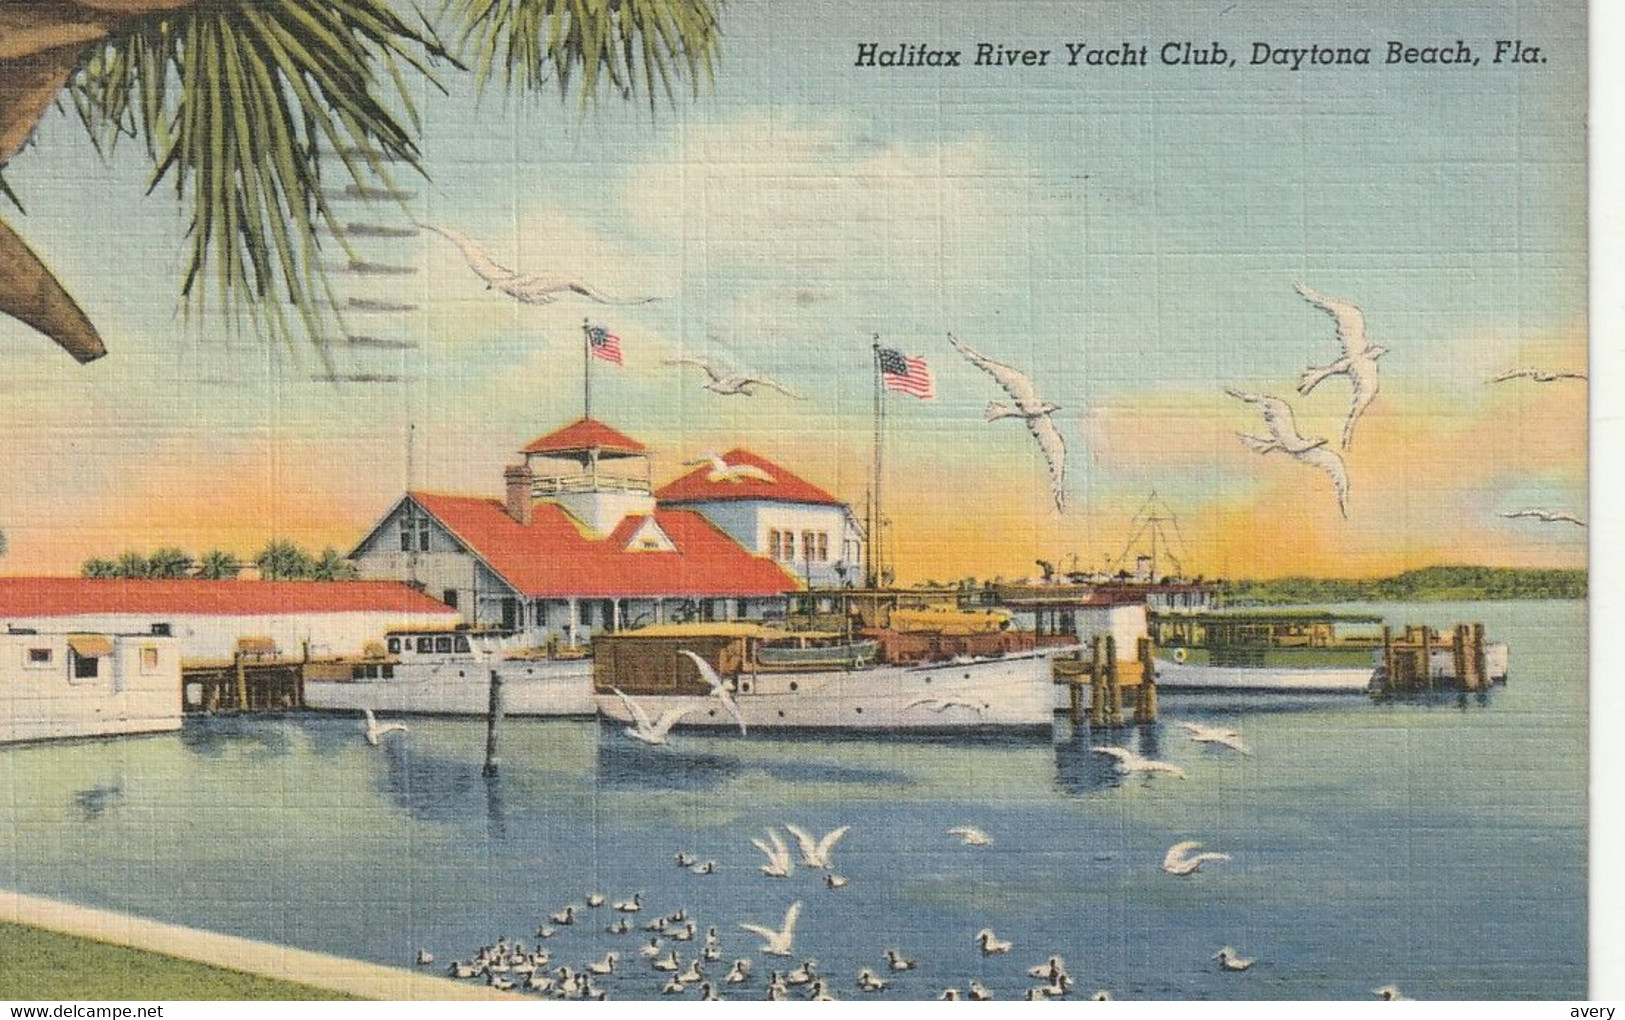 Halifax River Yacht Club. Dayton Beach, Florida - Daytona